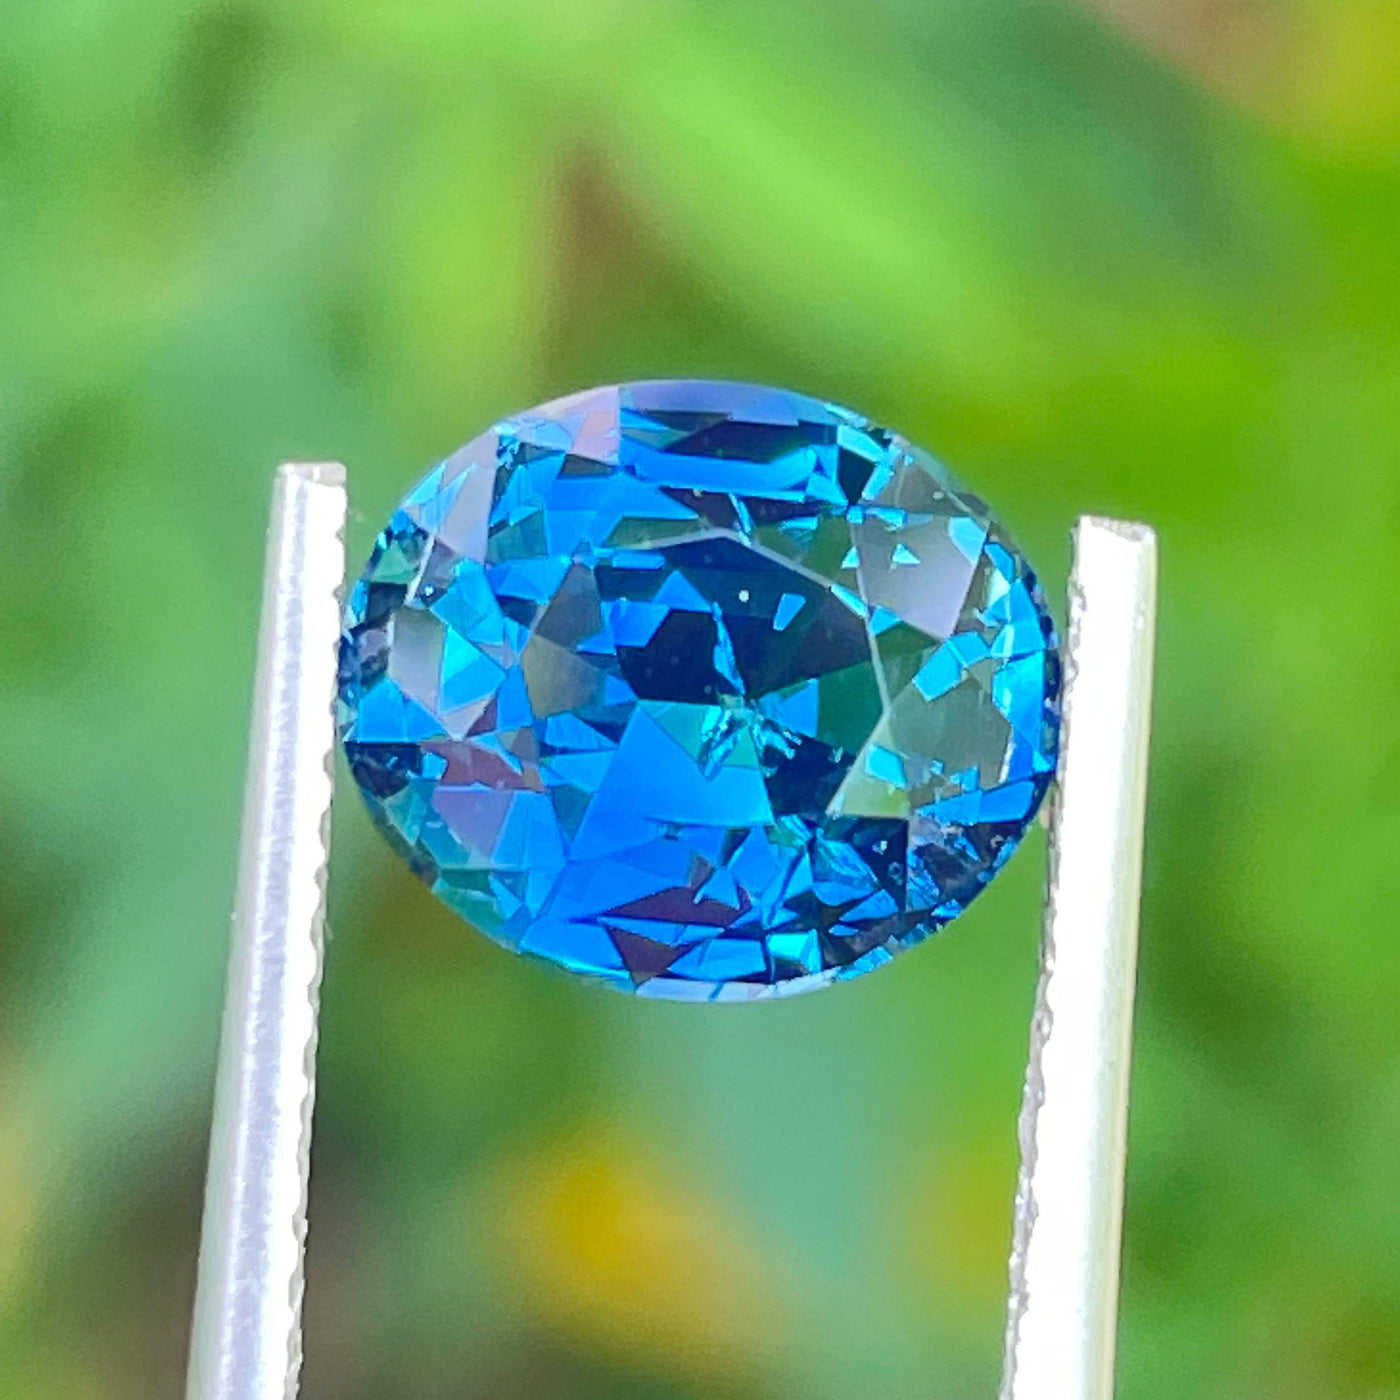 Blue Sapphire   3.55Ct